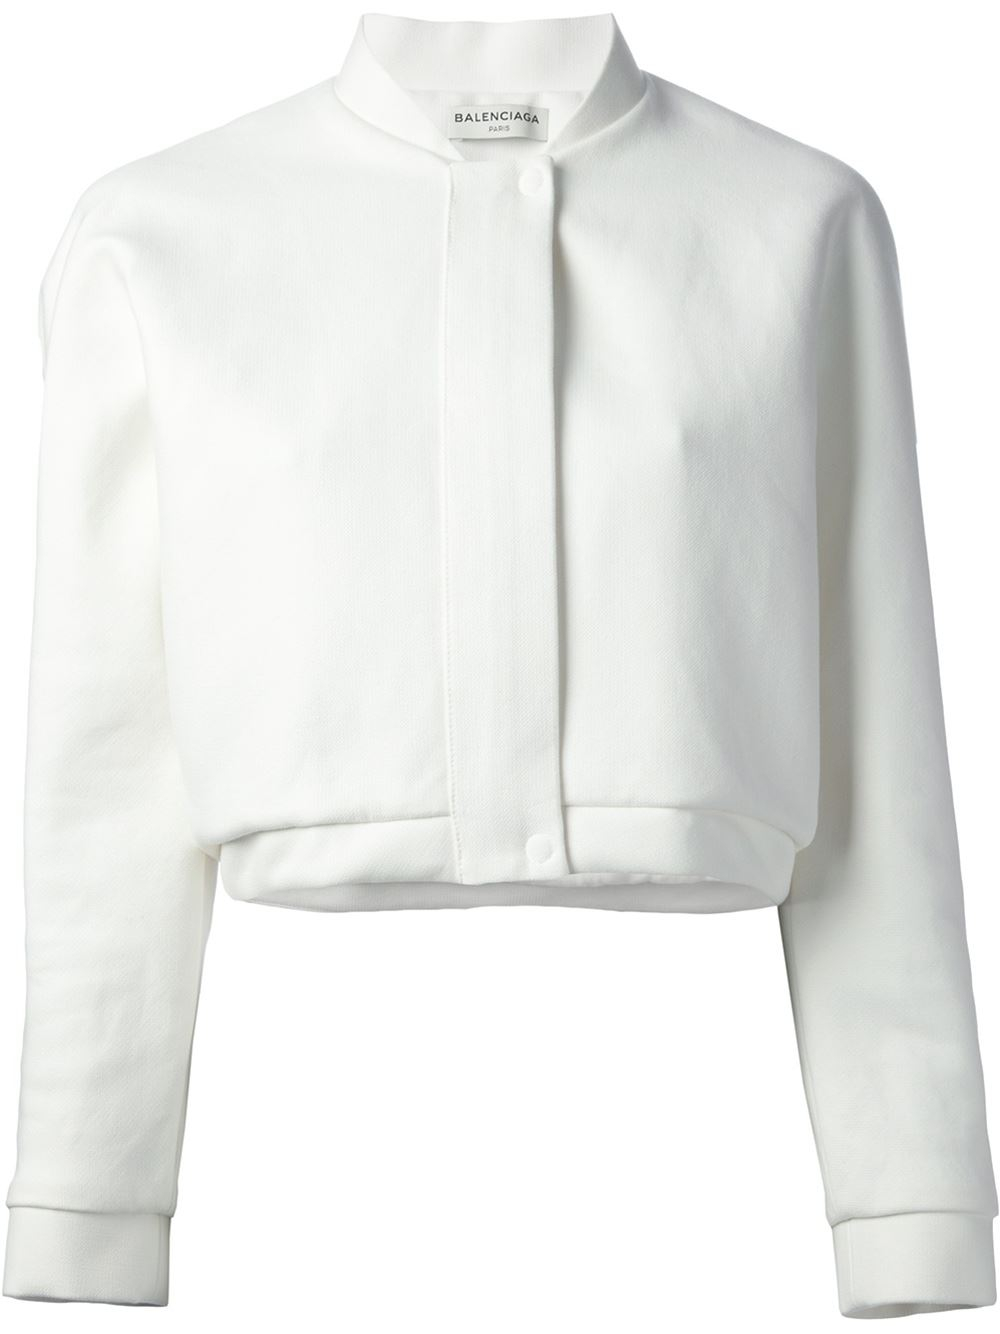 Balenciaga Cropped Bomber Jacket in White | Lyst